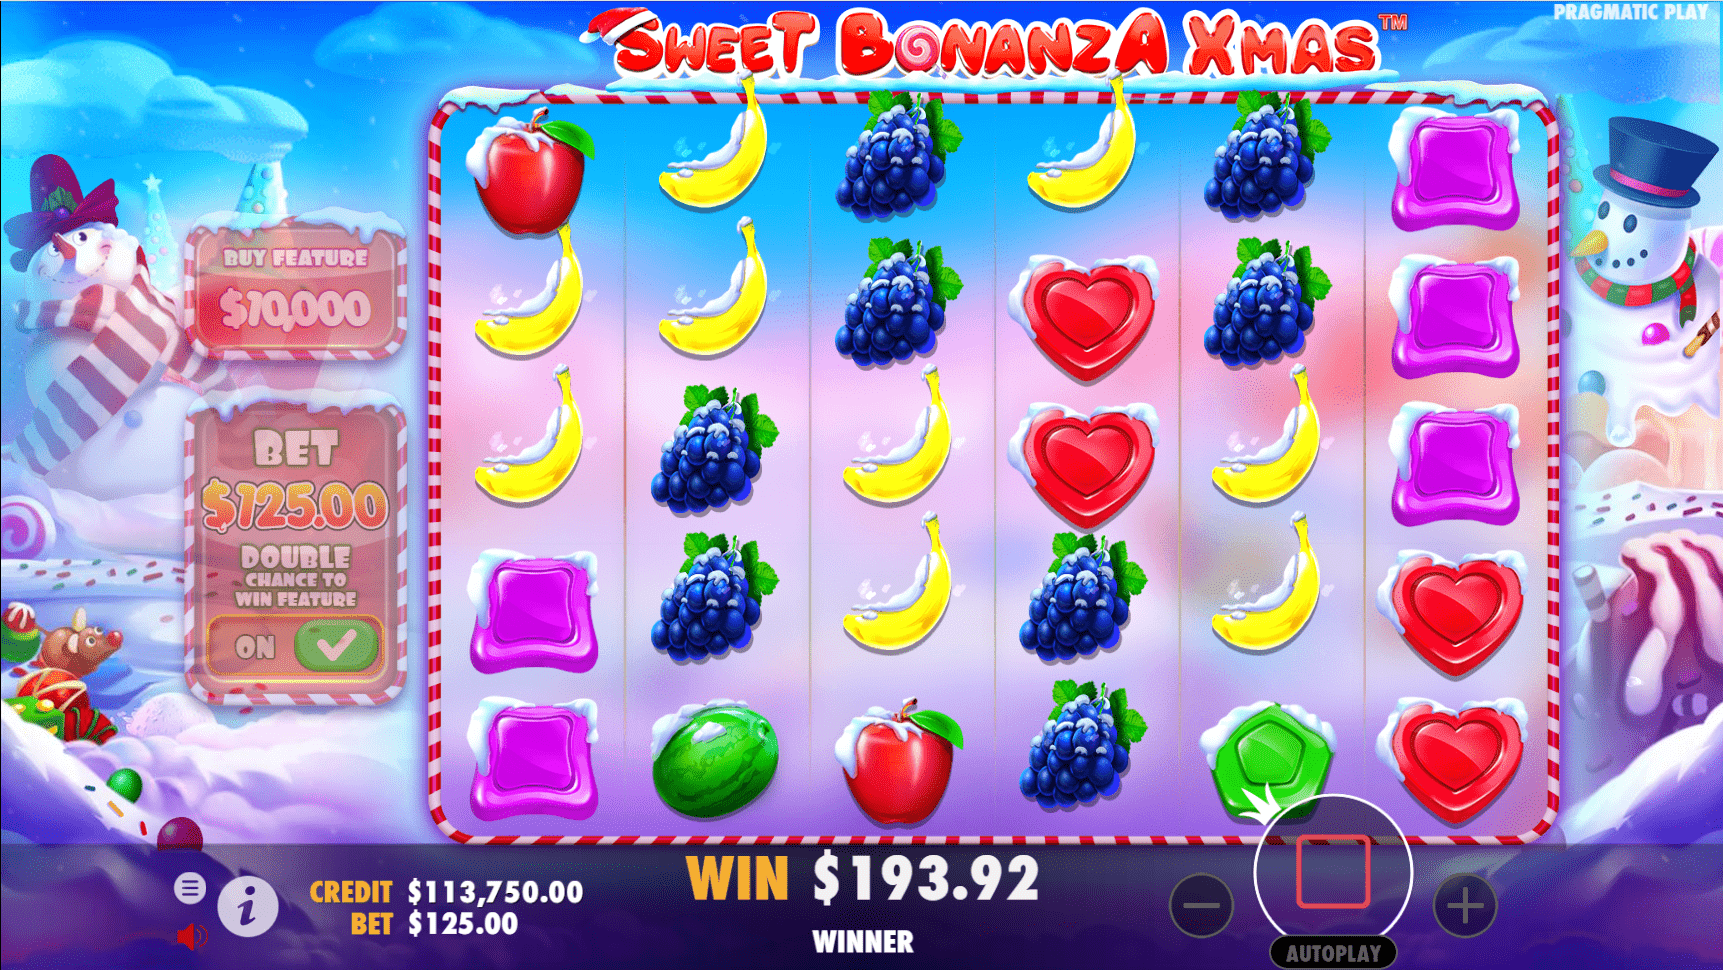 Sweet bonanza demo slot